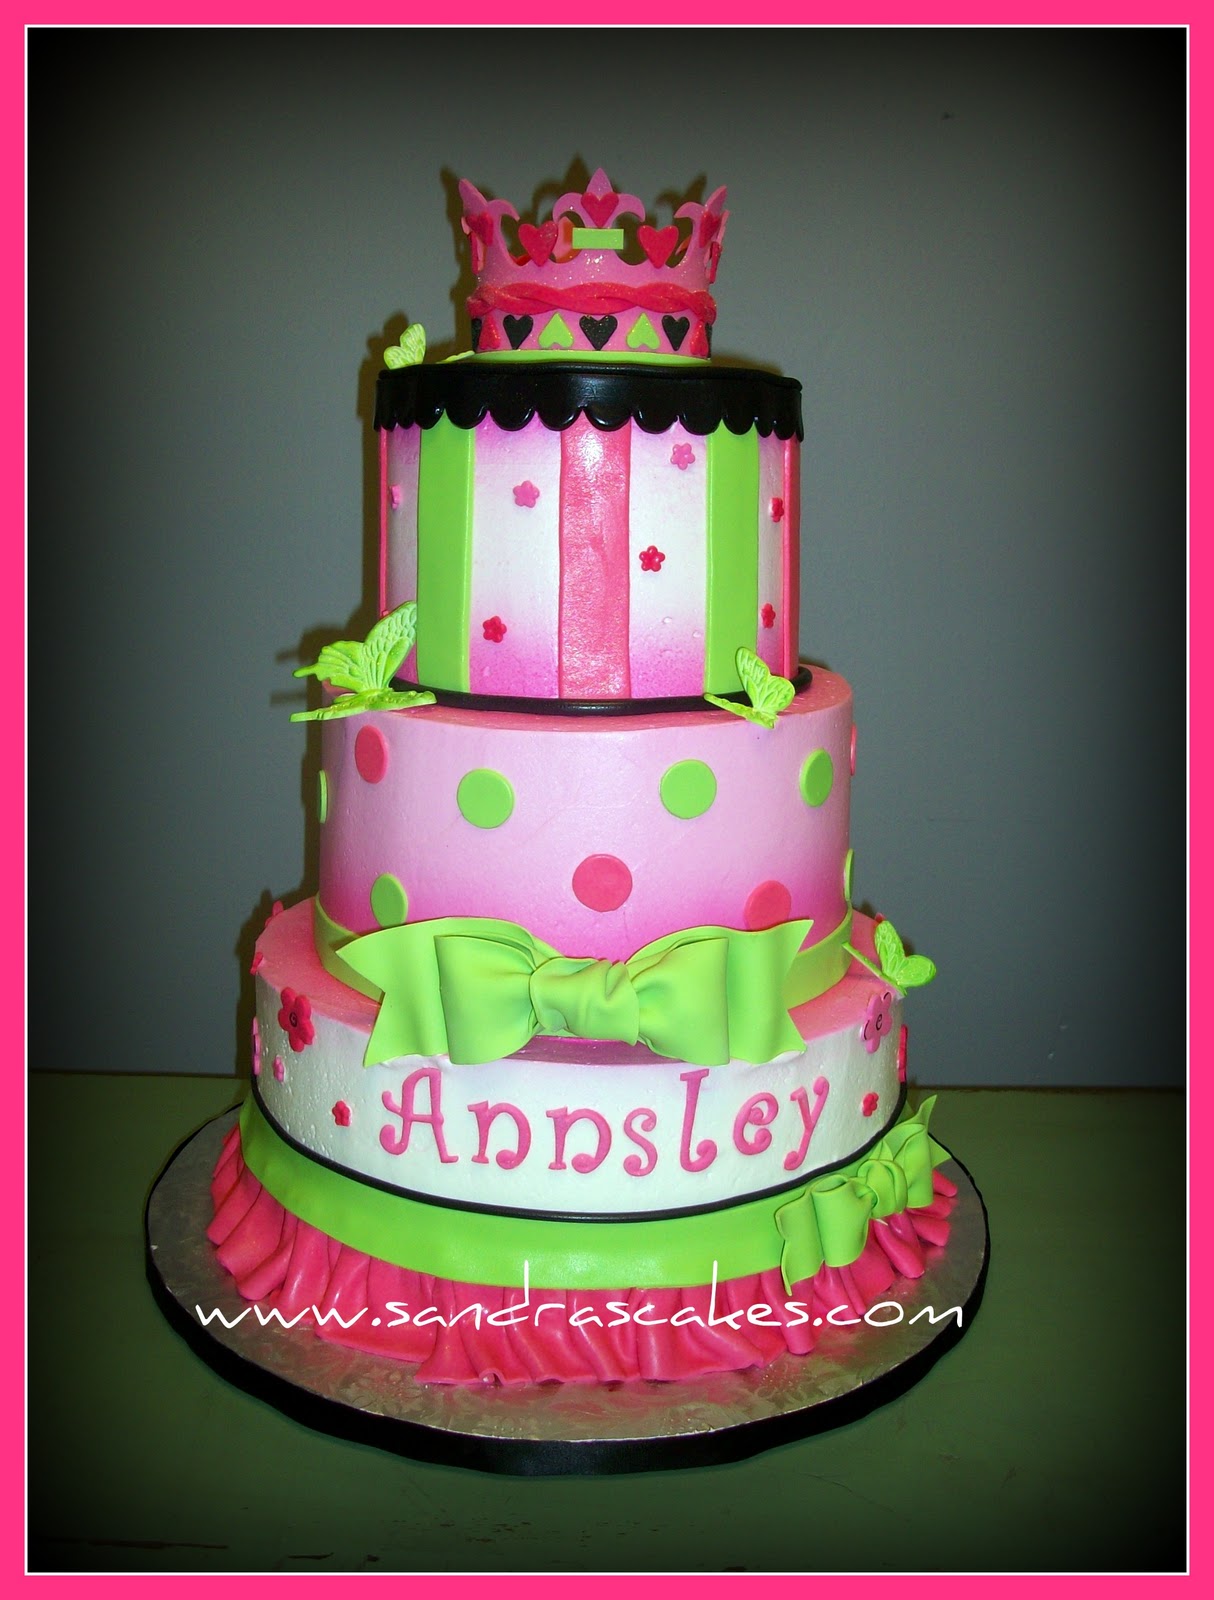 Sandra's Cakes: Feb 15, 2011